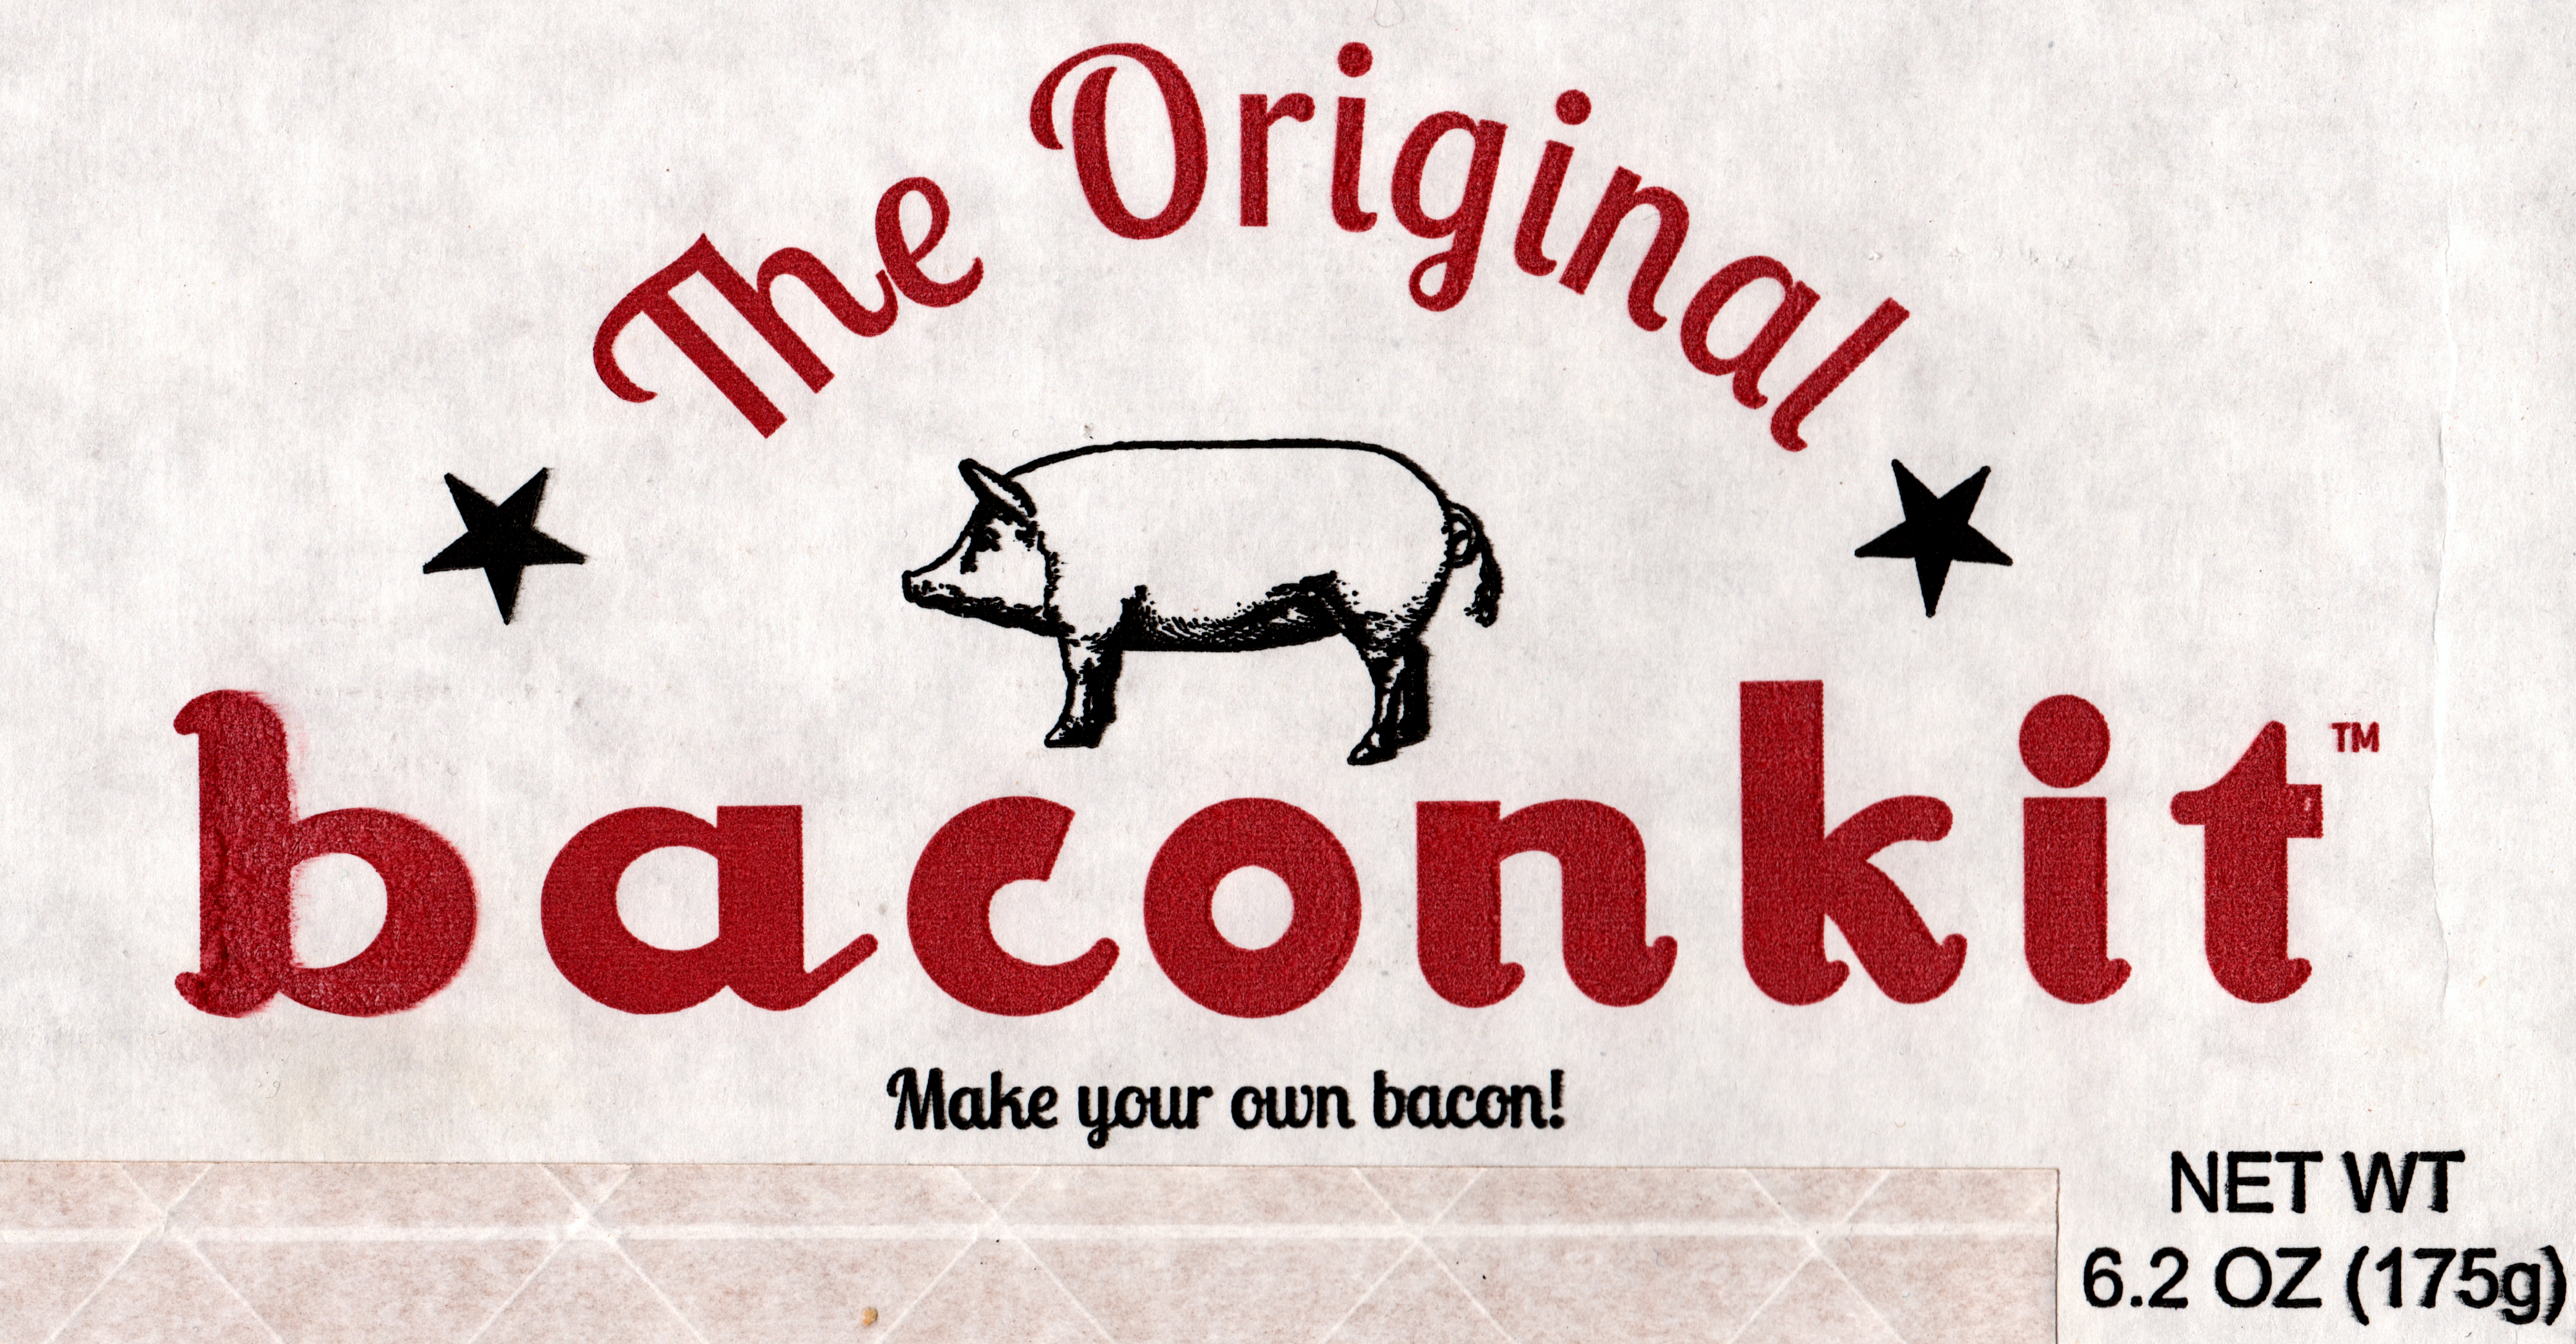 Bacon Kit Box